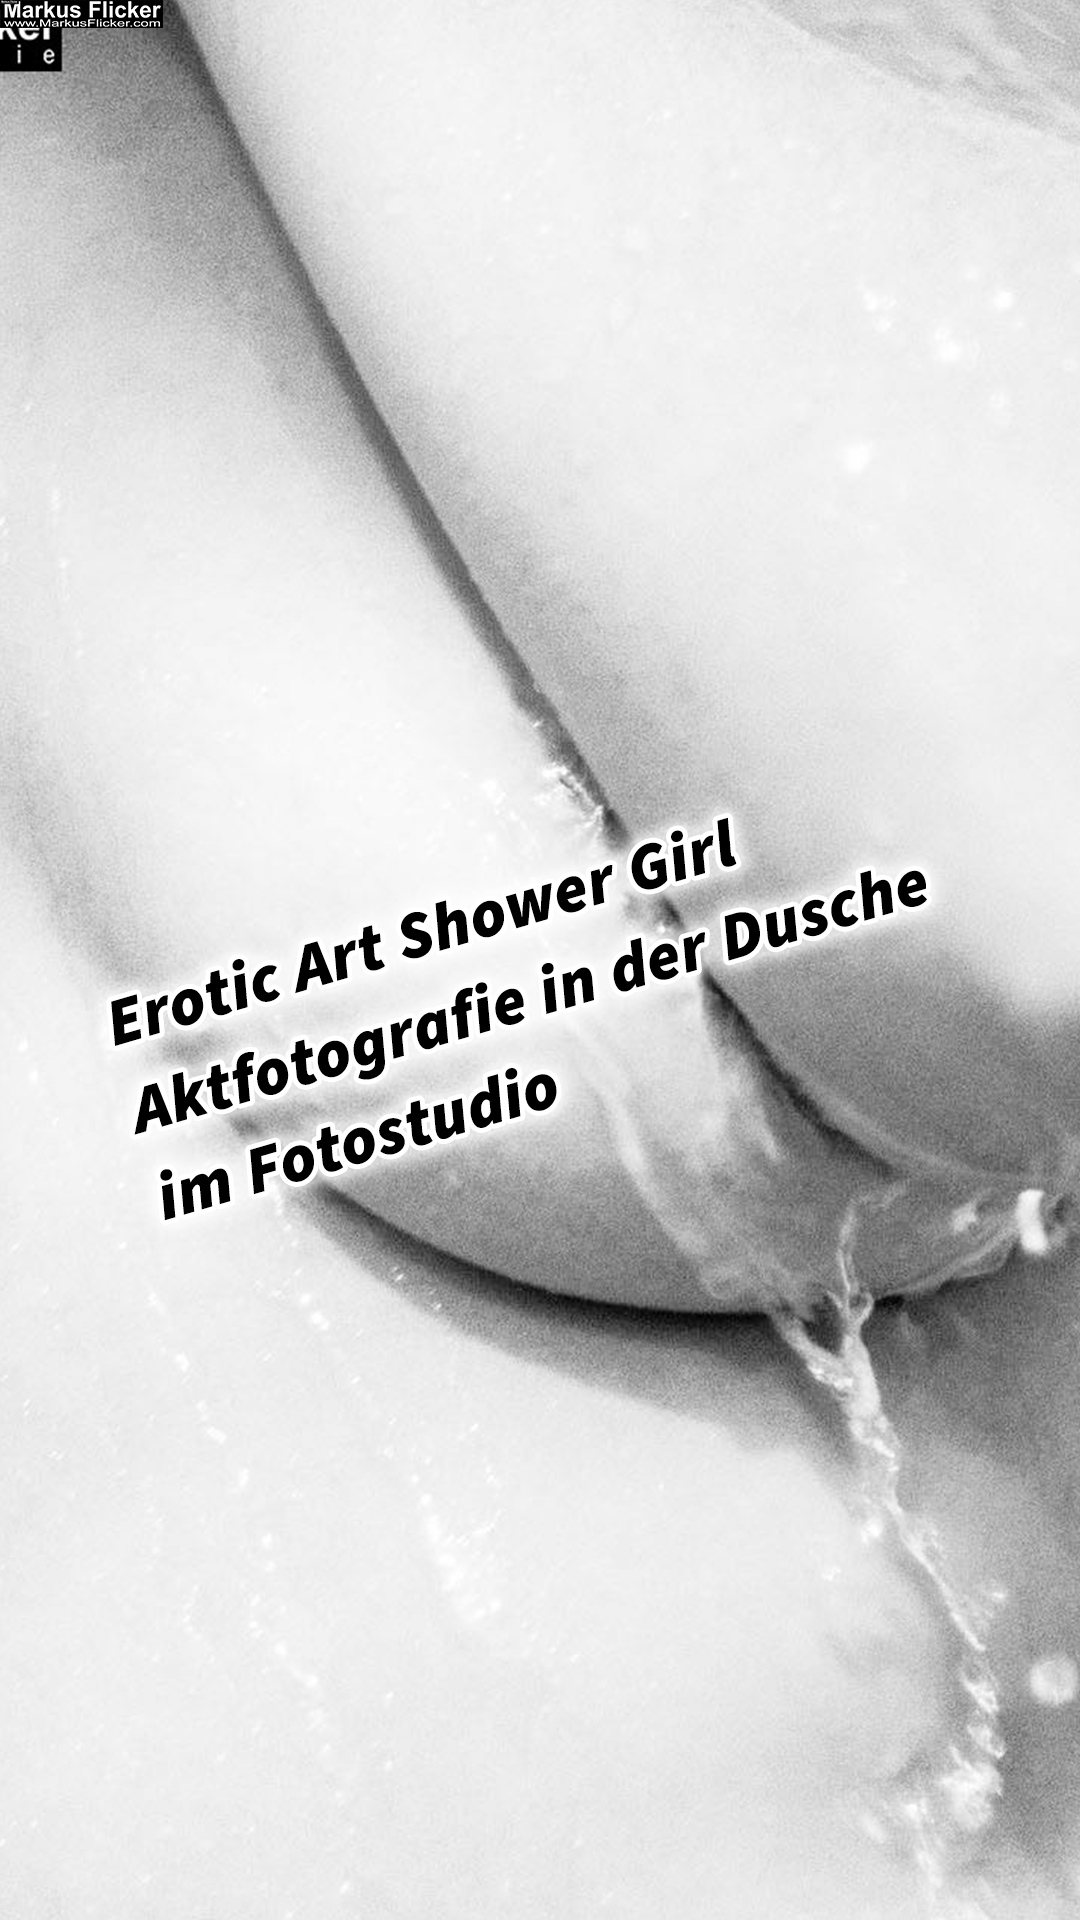 Erotic Art Shower Girl Aktfotografie in der Dusche im Fotostudio